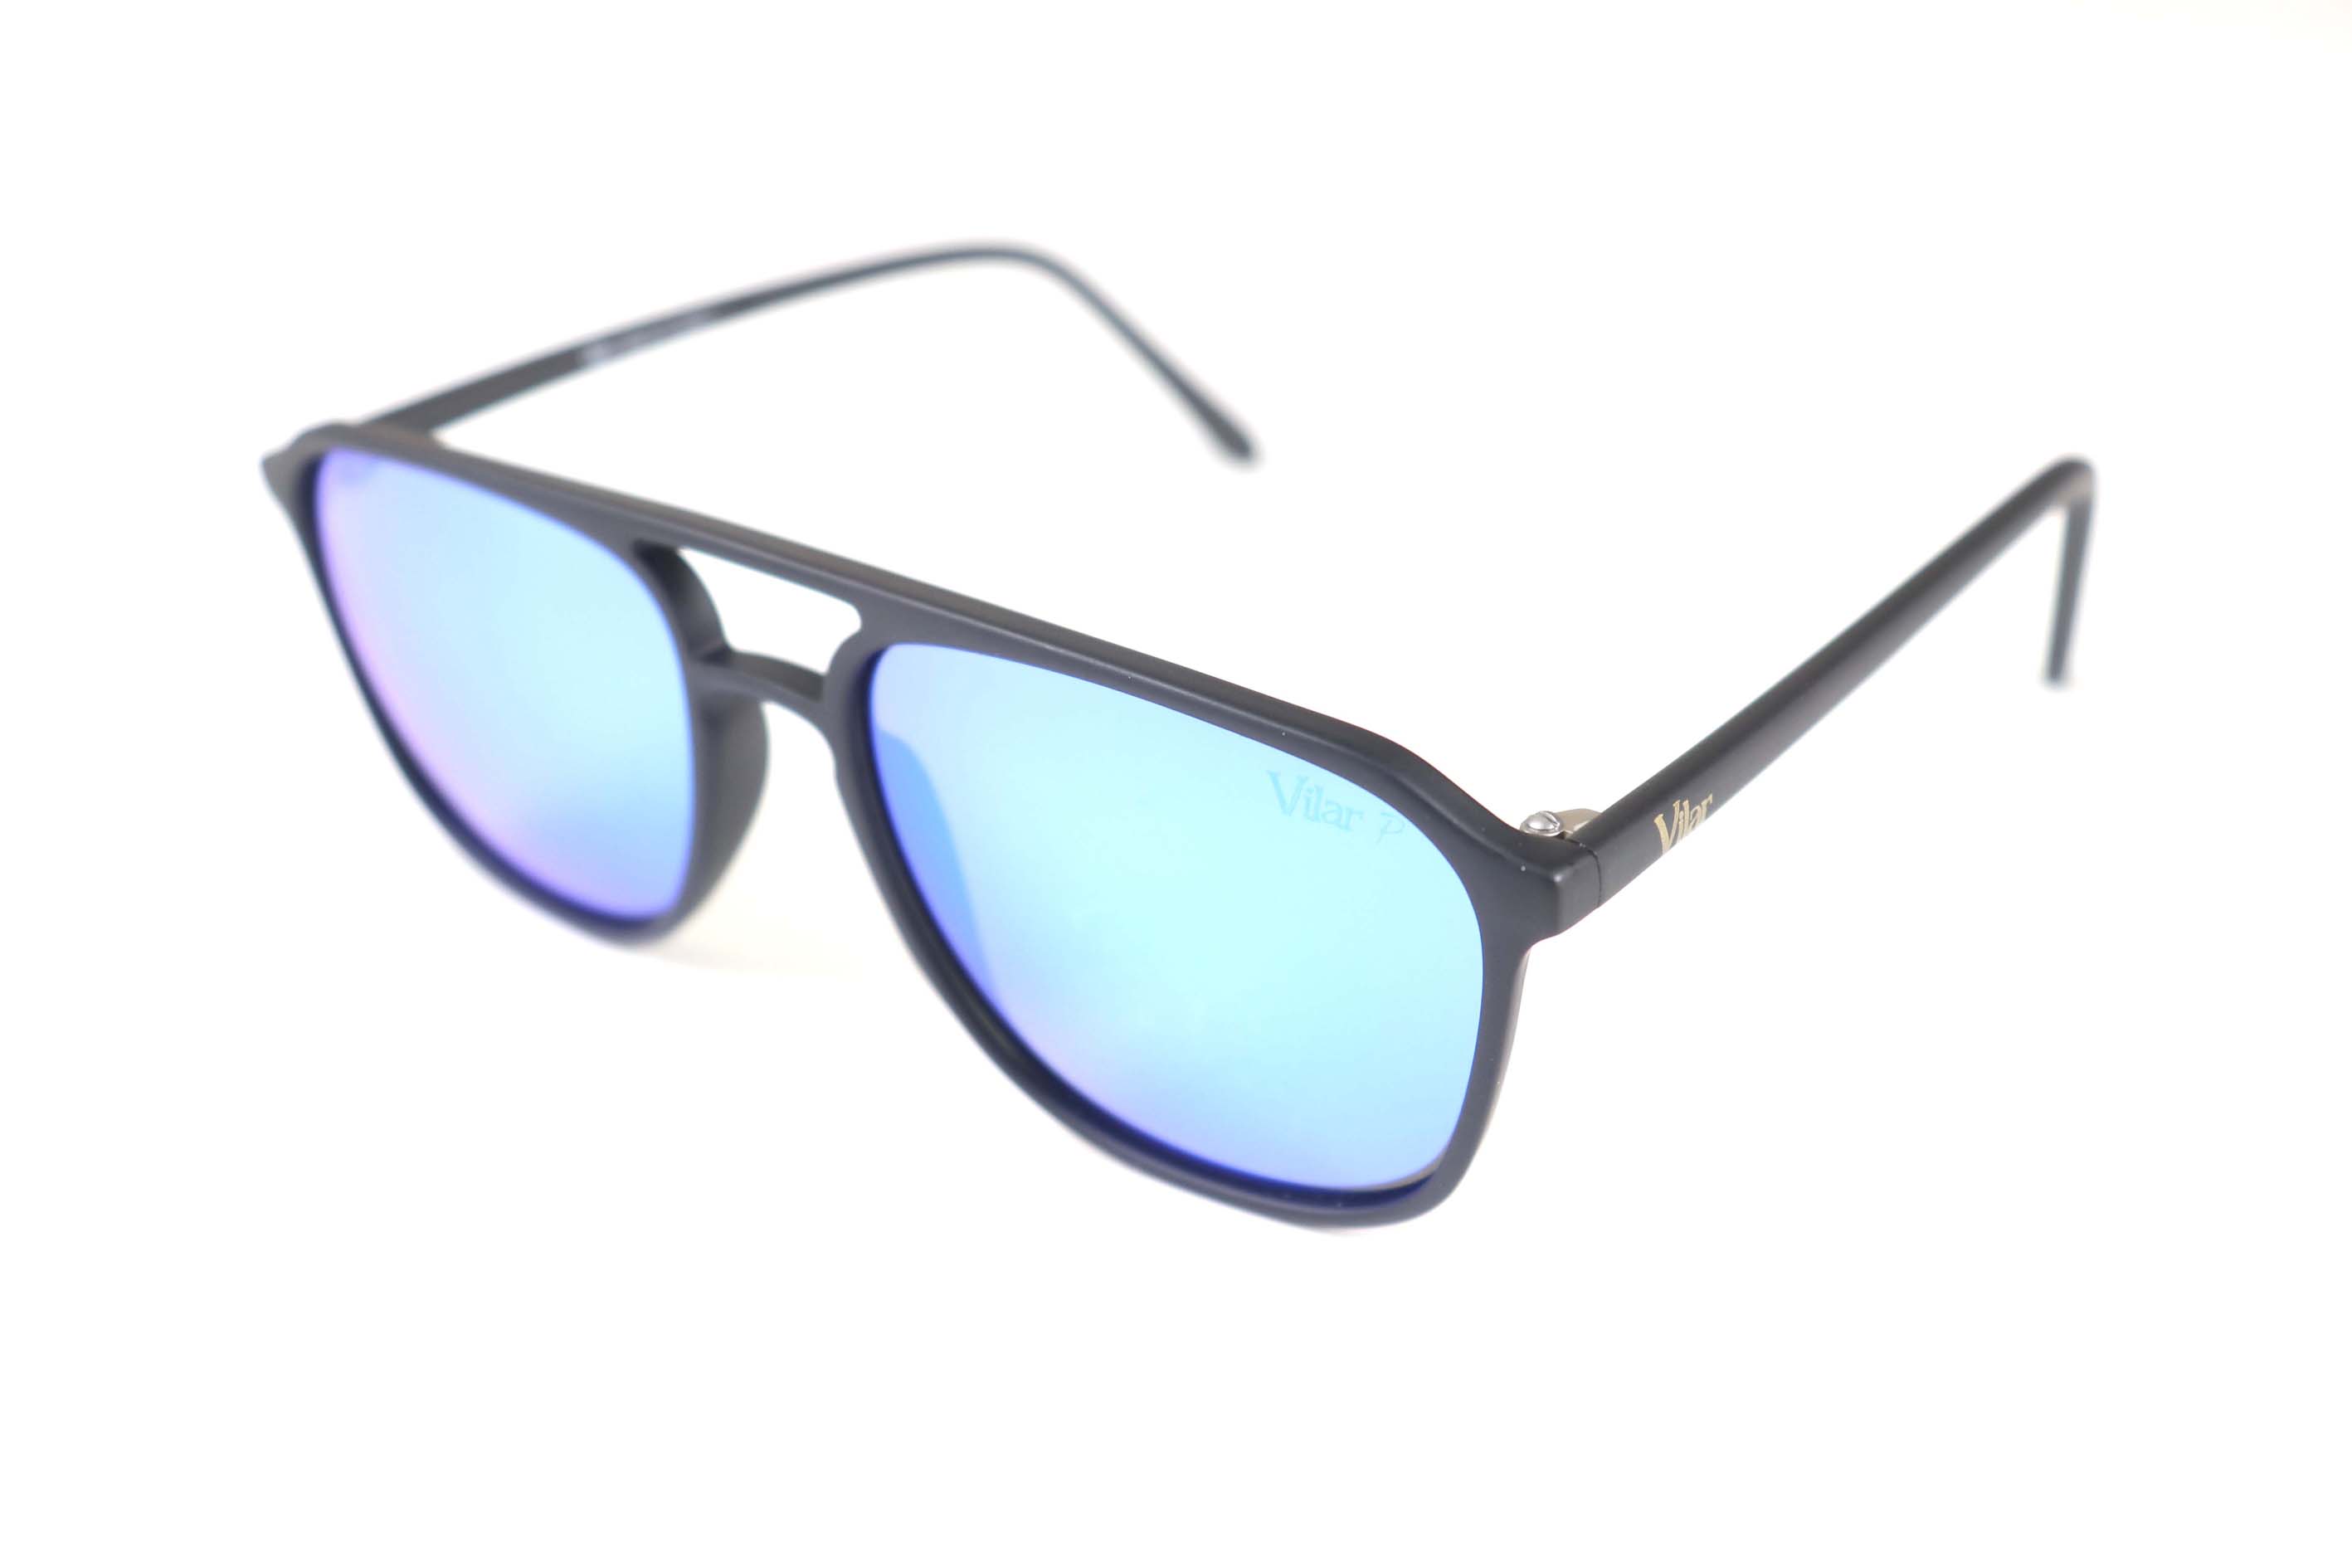 Vilar Sunglasses-OR-S336-C1-S